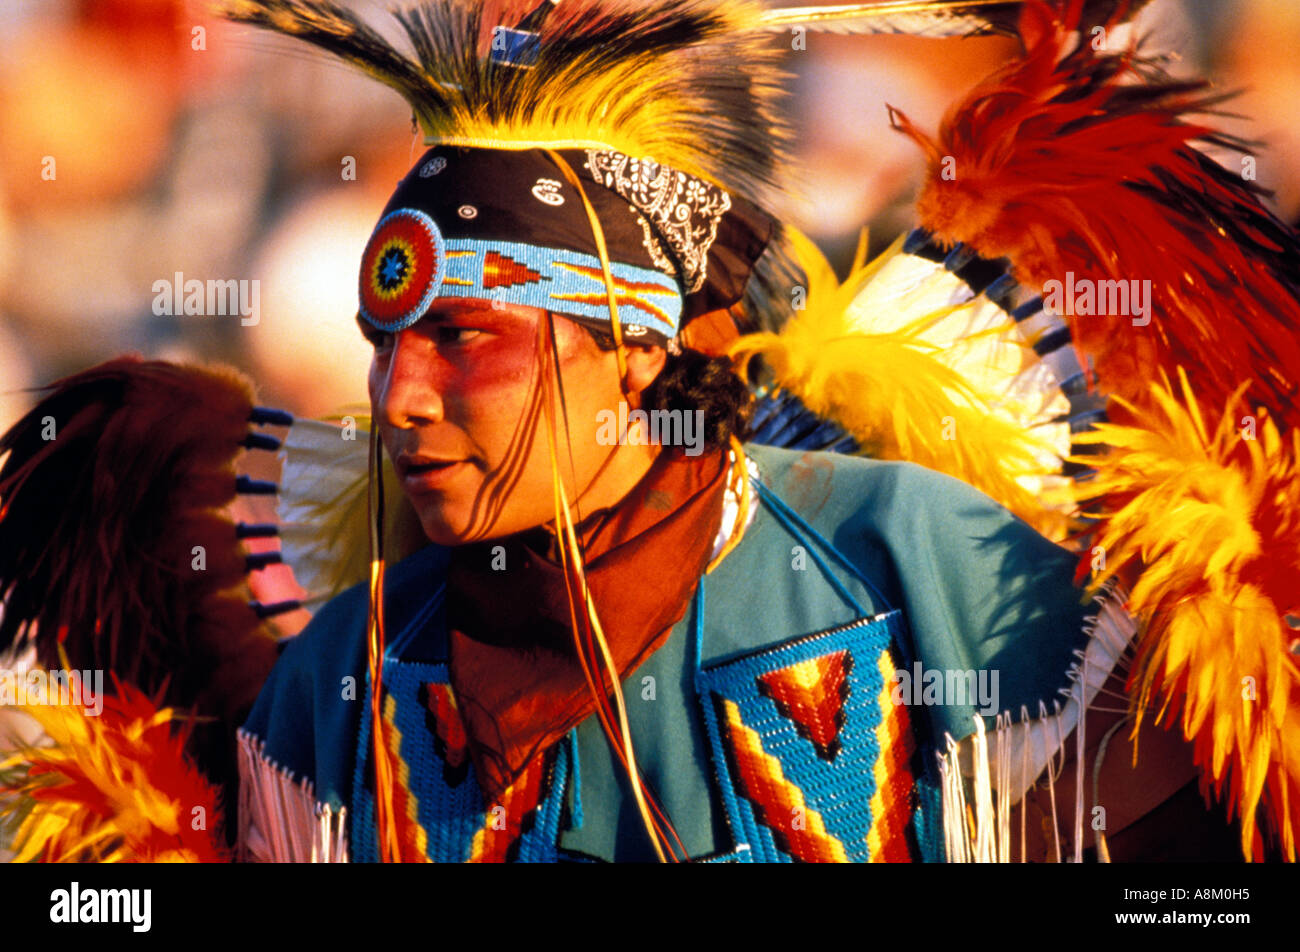 USA IDAHO NATIVE AMERICAN Indian man in colorful tribal dress dancing ...